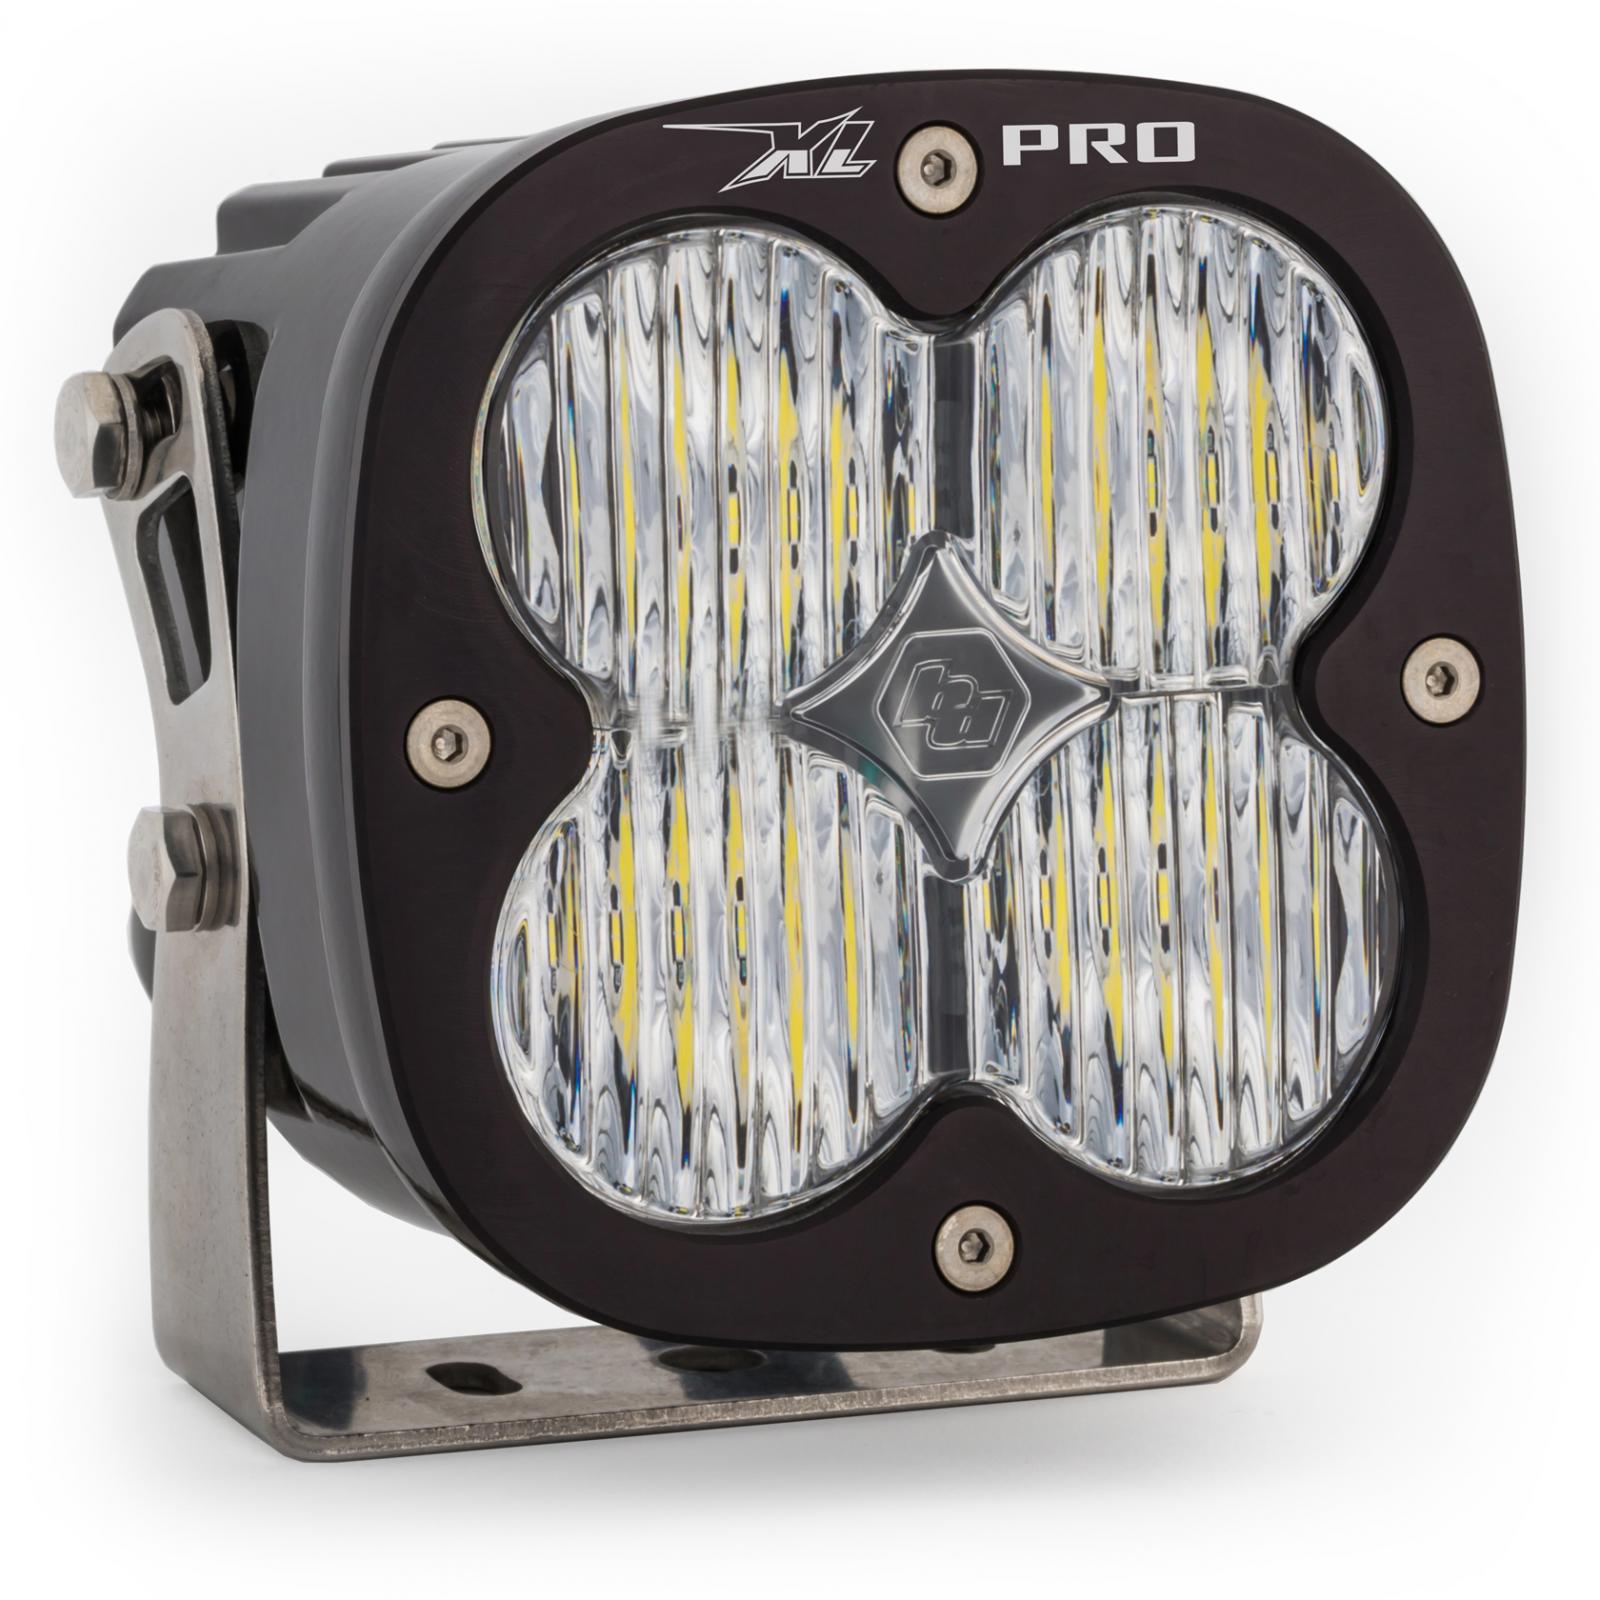 Baja Designs LED Light Pods Clear Lens Spot Each XL Pro Wide Cornering